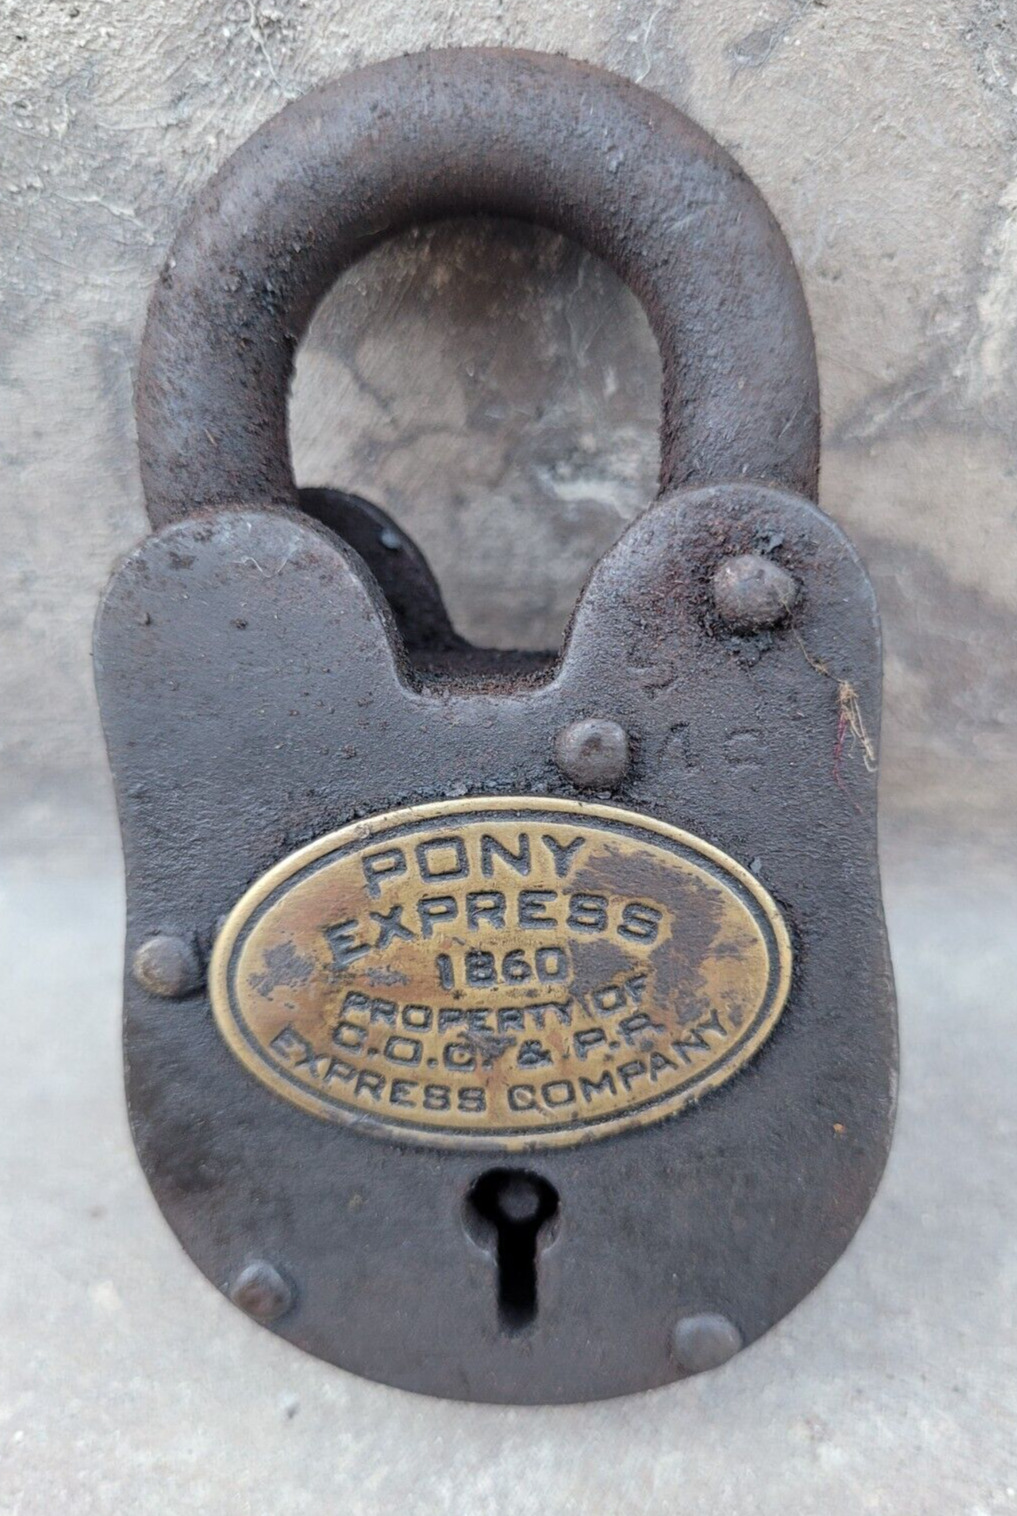 Pony Express 1860 Property Of C.O.C. & P.P. Express Cast Iron Lock Padlock 2 Key